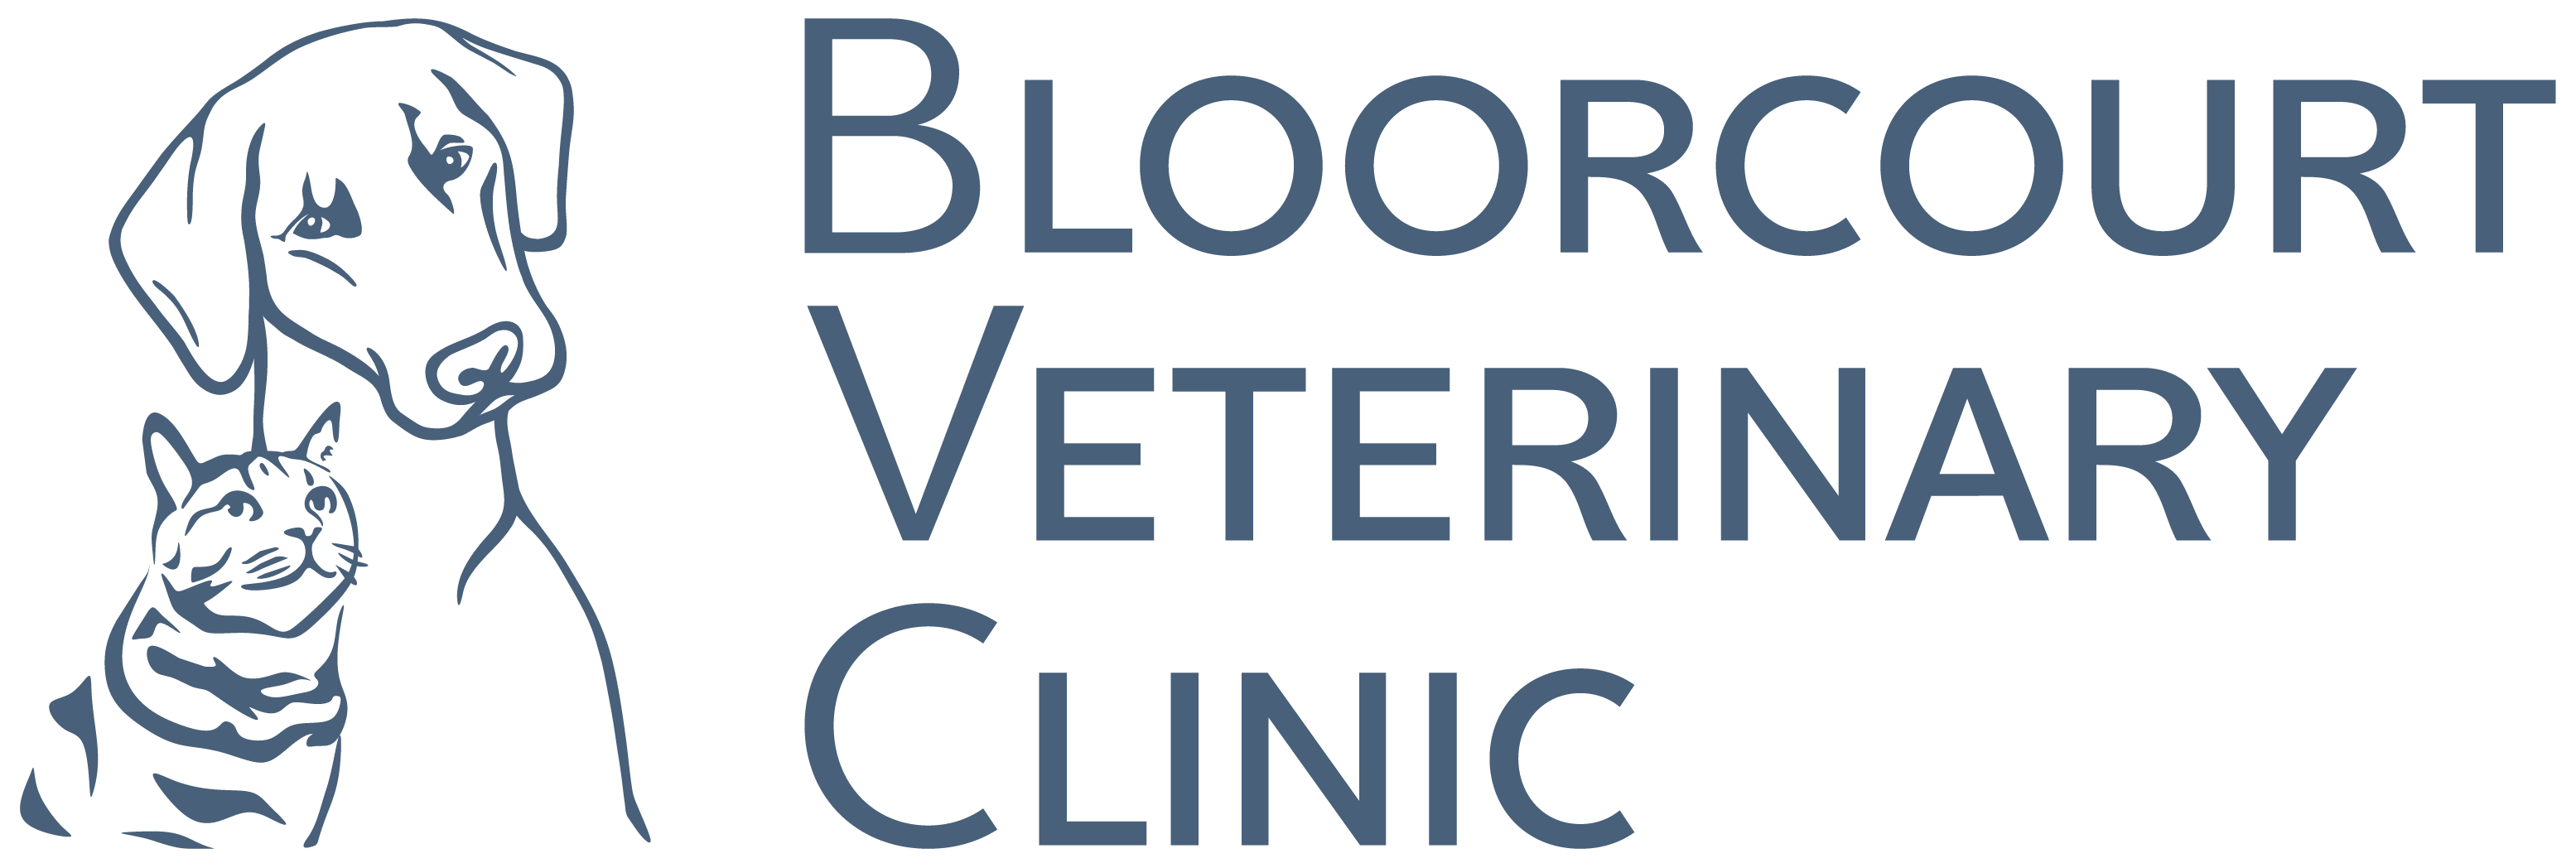 Bloorcourt Veterinary Clinic